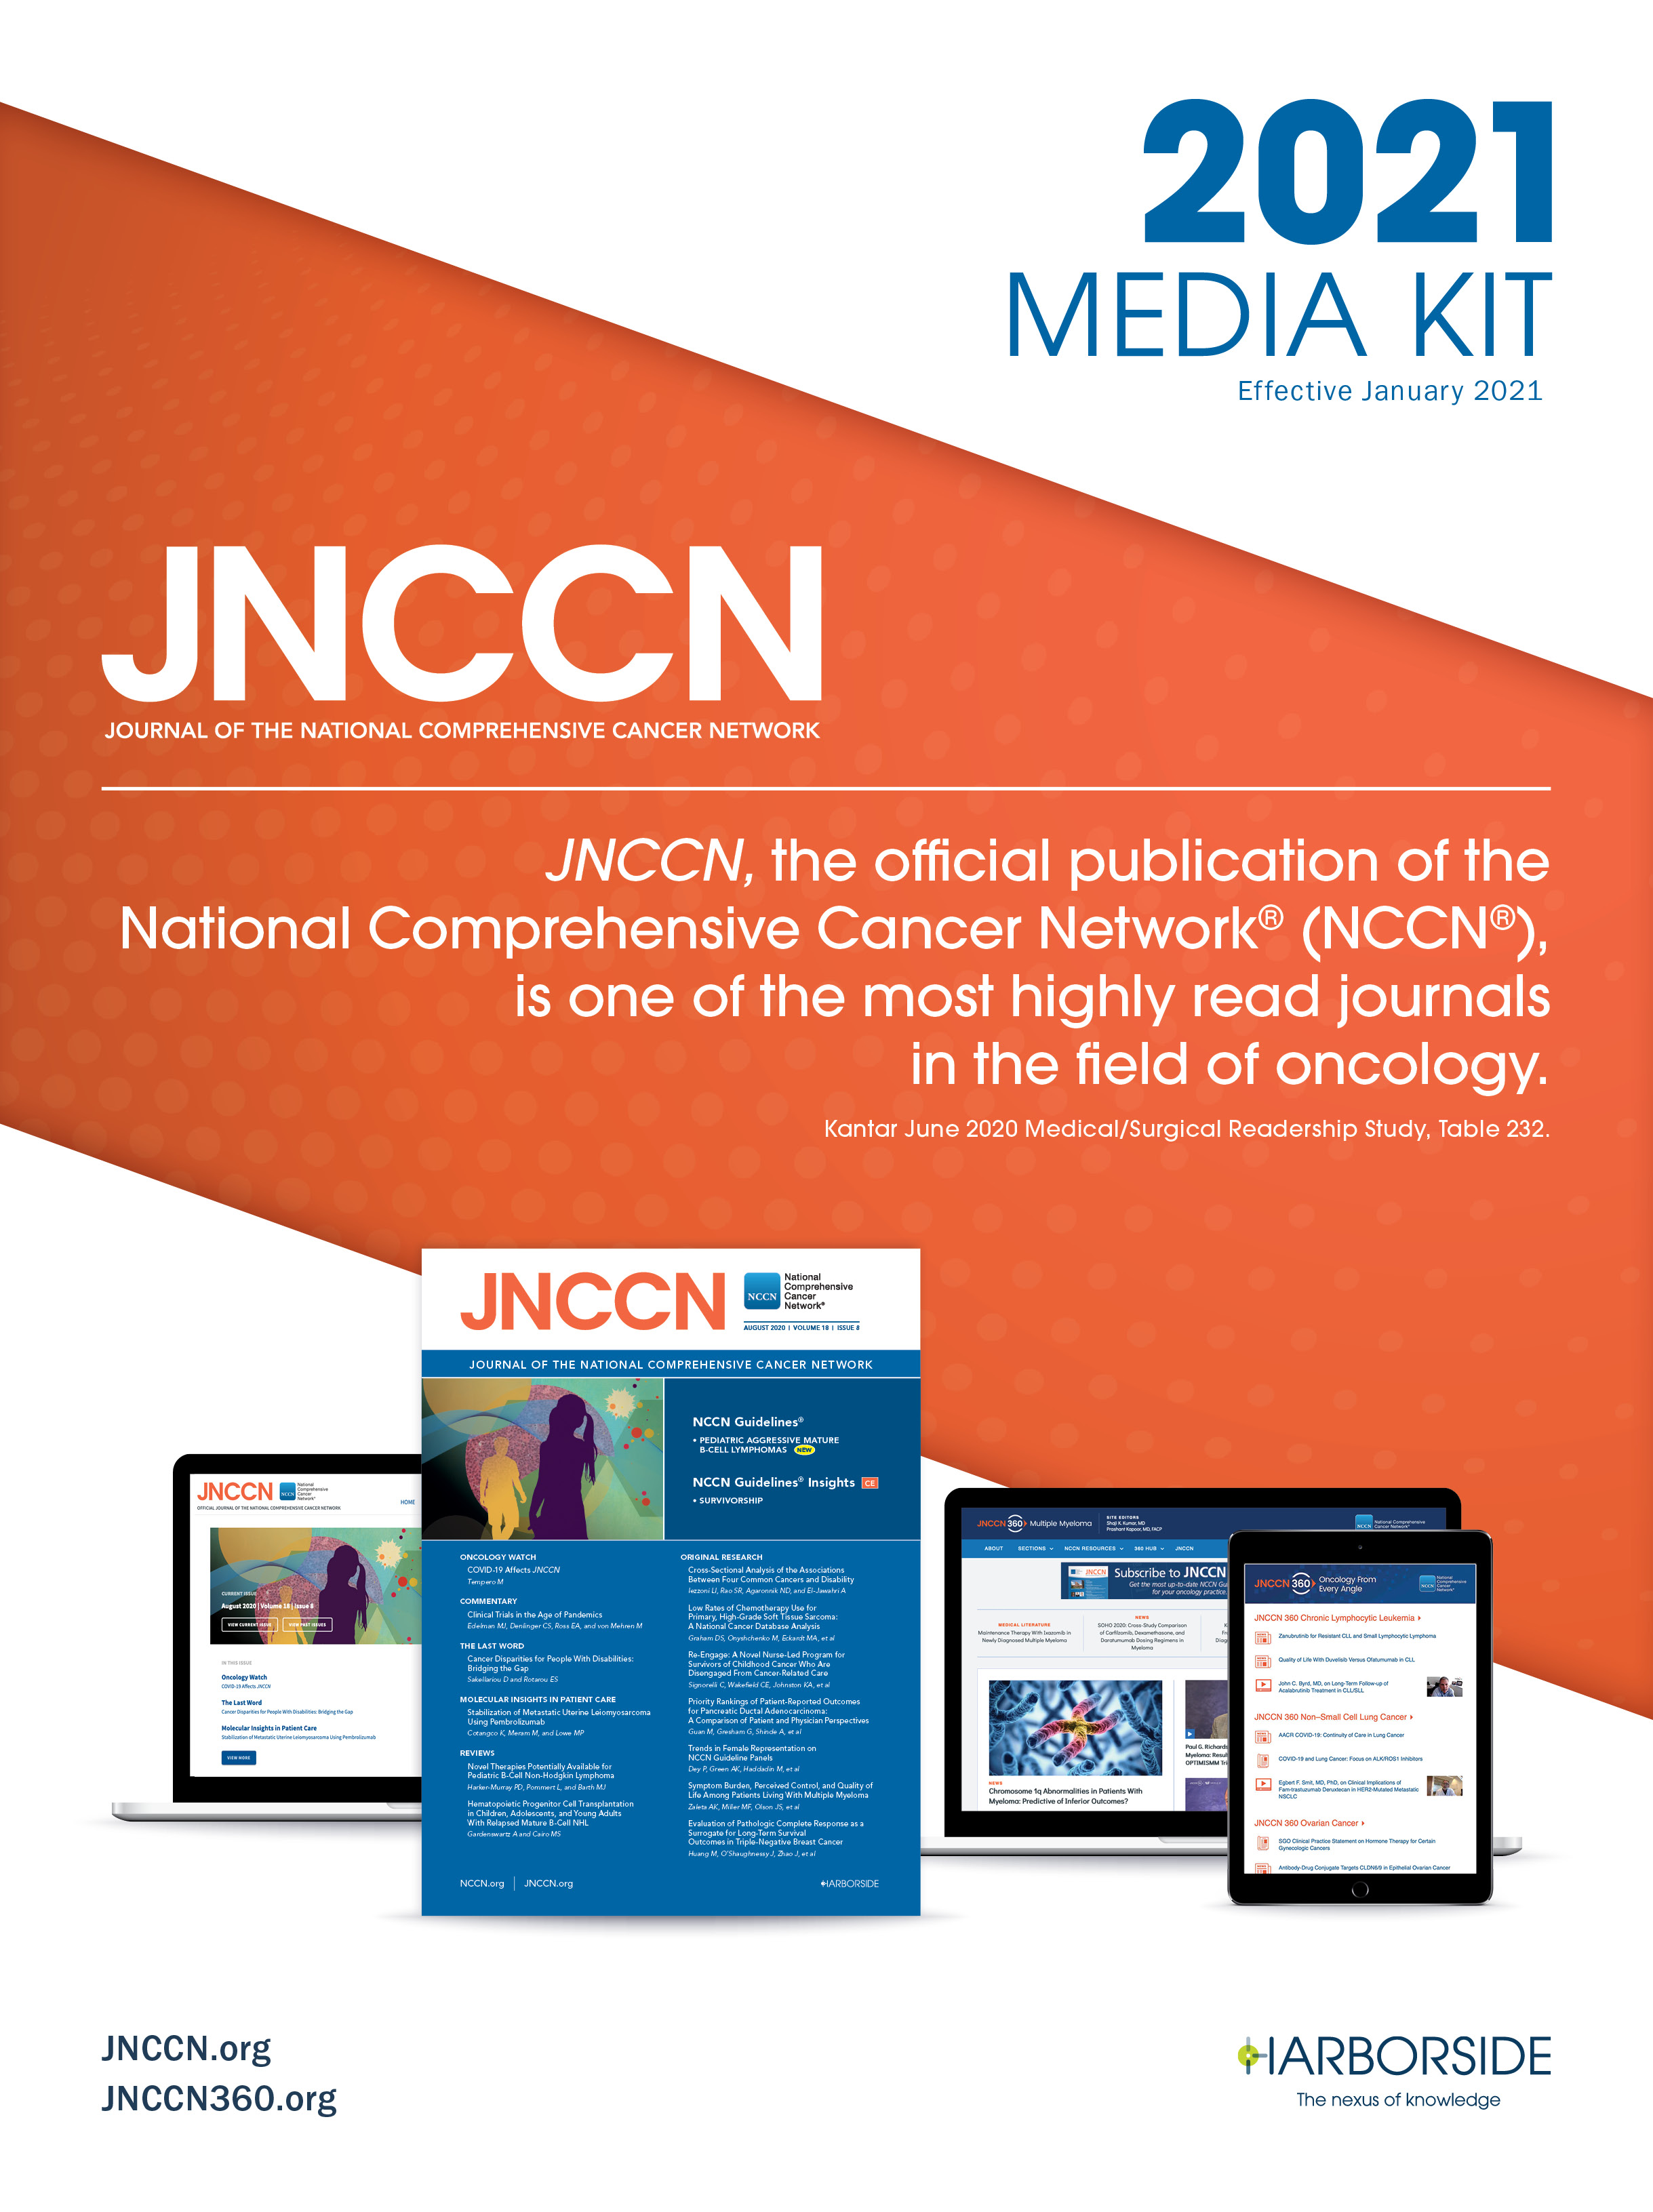 JNCCN 360 Rate Card Image